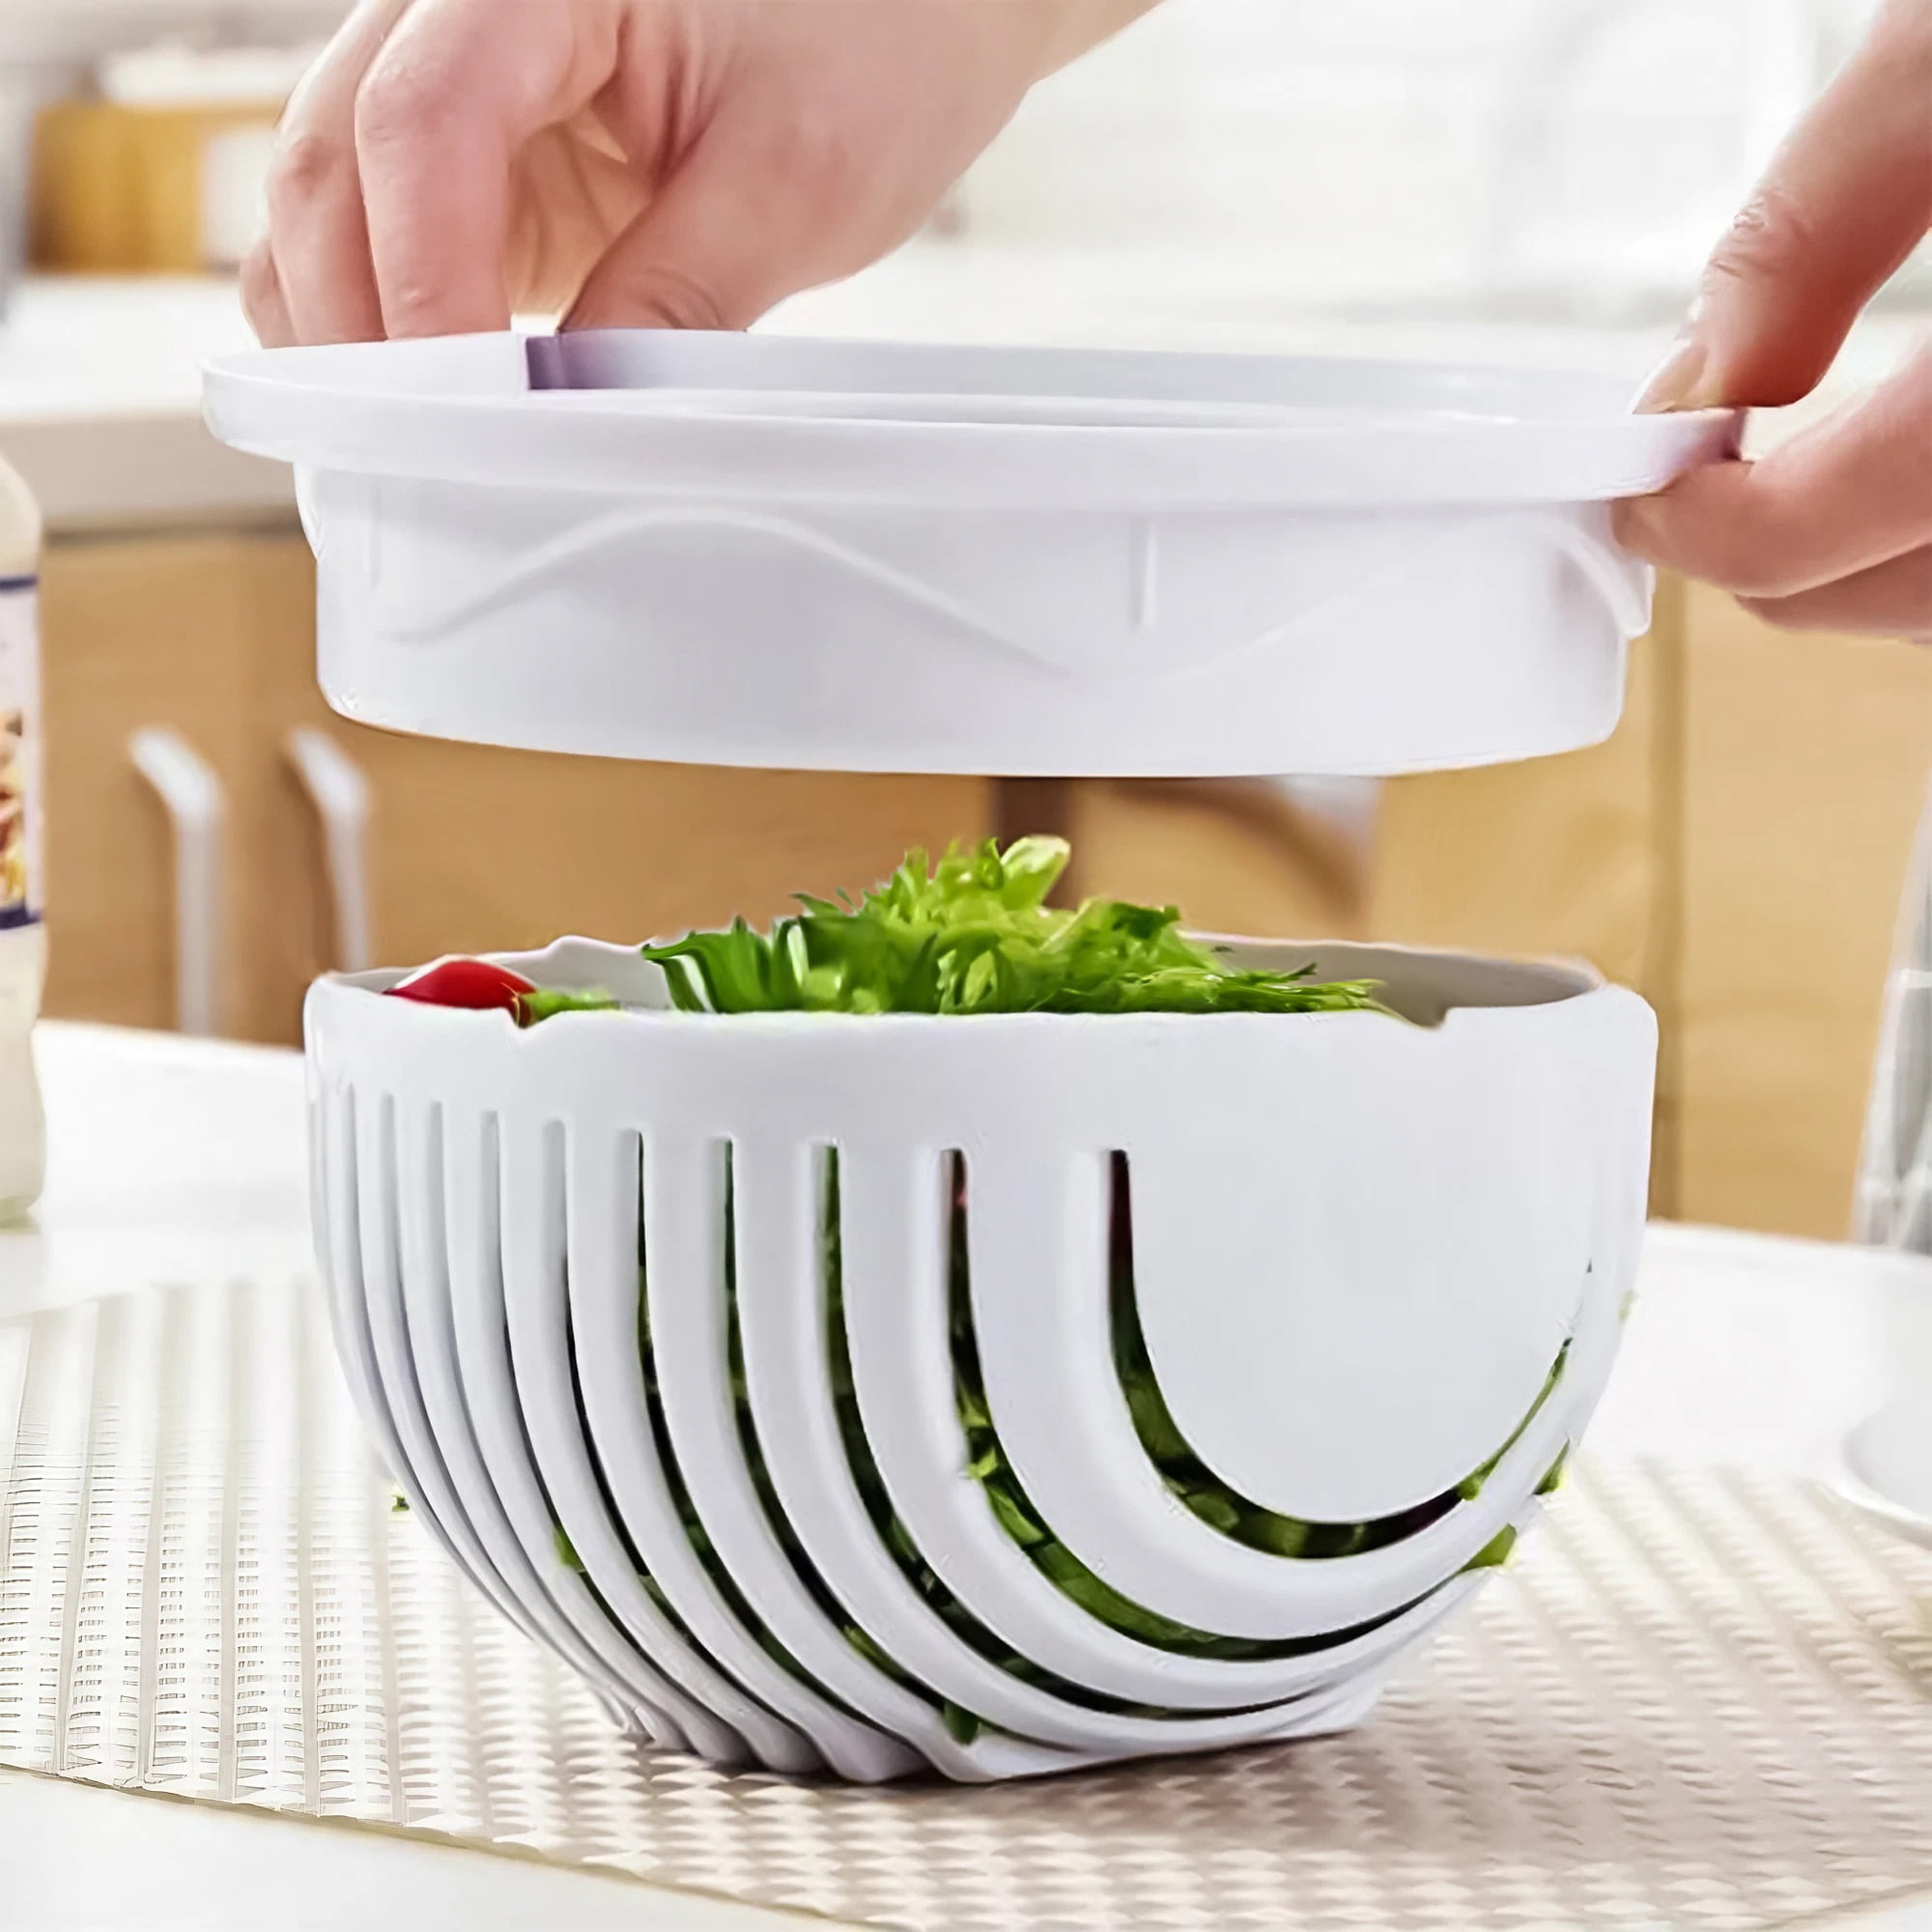 Innovative Living II-245 10 x 4.5 in. Salad Cutter Bowl